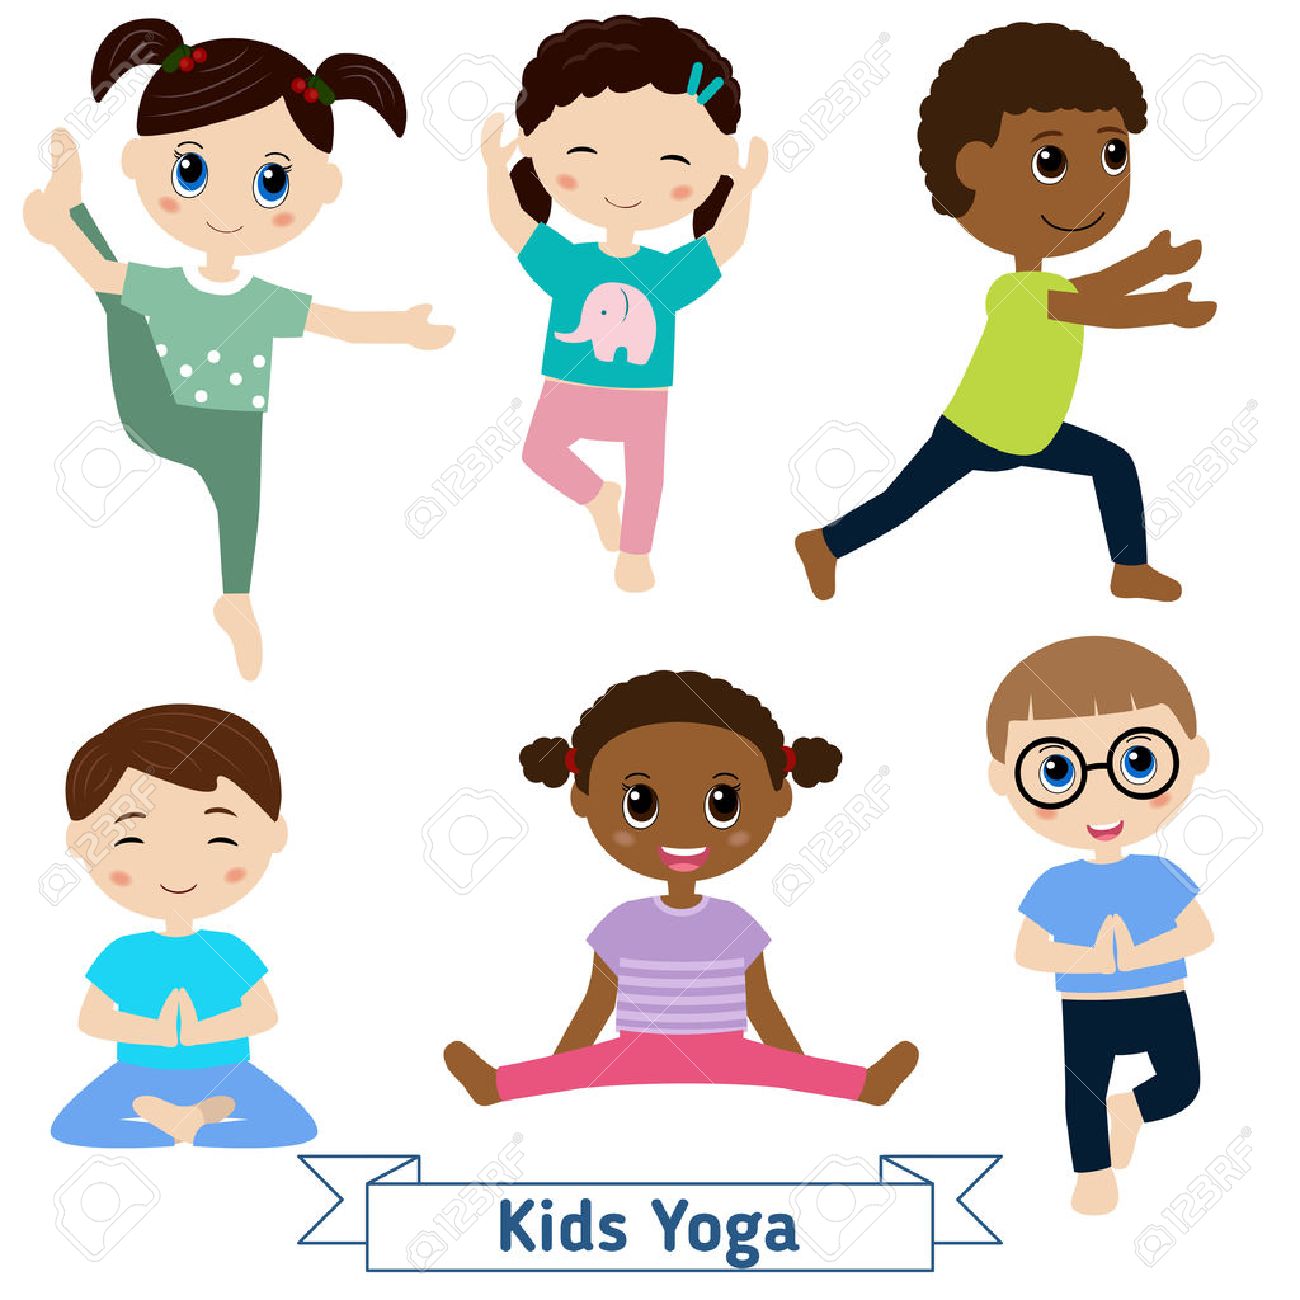 Yoga For Kids Clipart.